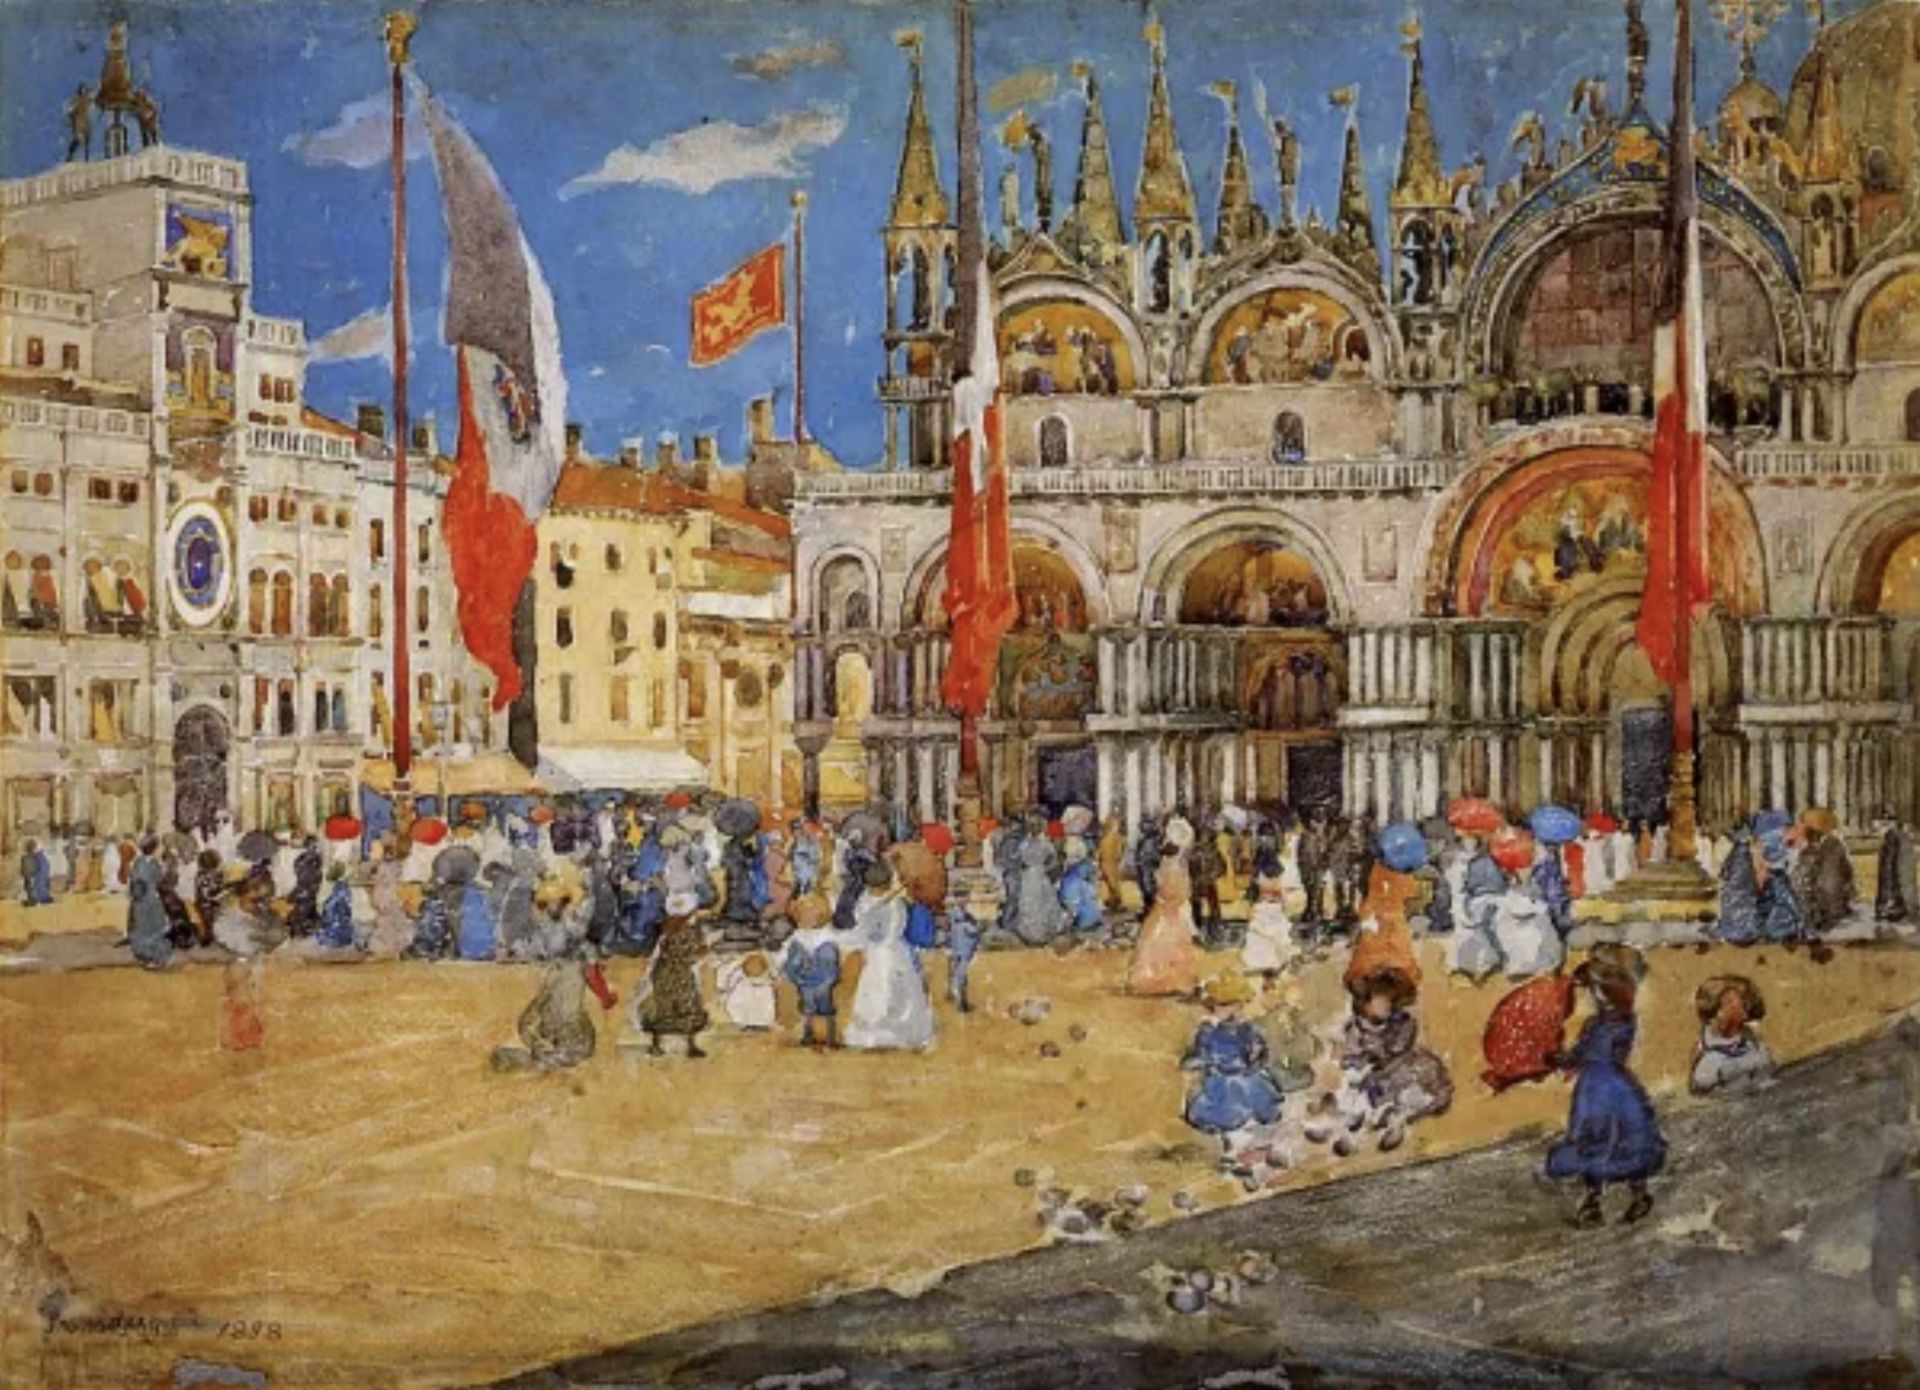 Maurice Brazil Prendergast "St. Marks, Vencie" Painting